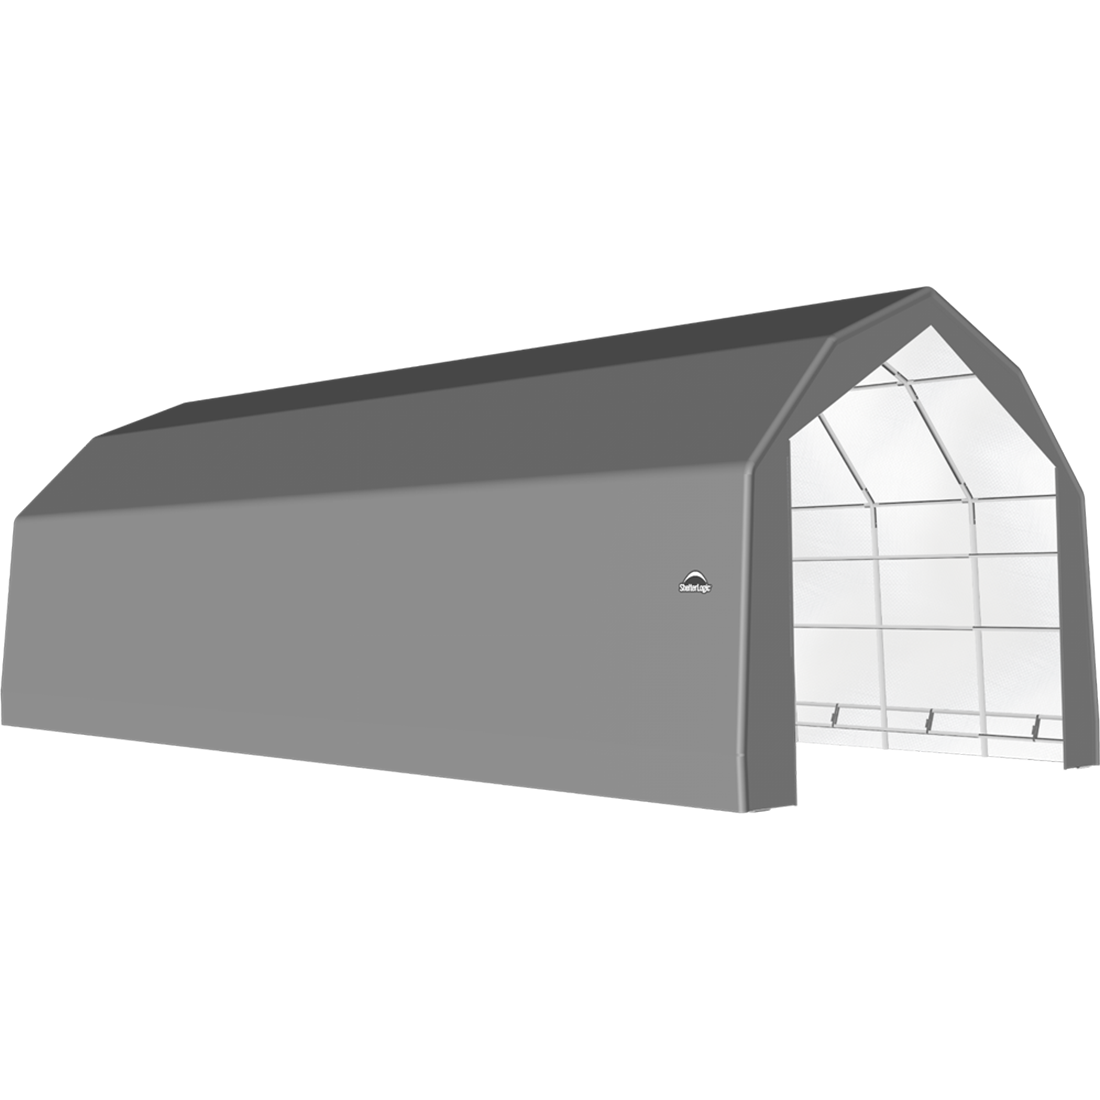 ShelterTech SP Series Barn Shelter, 20 ft. x 44 ft. x 15 ft. Heavy Duty PVC 14.5 oz. Gray